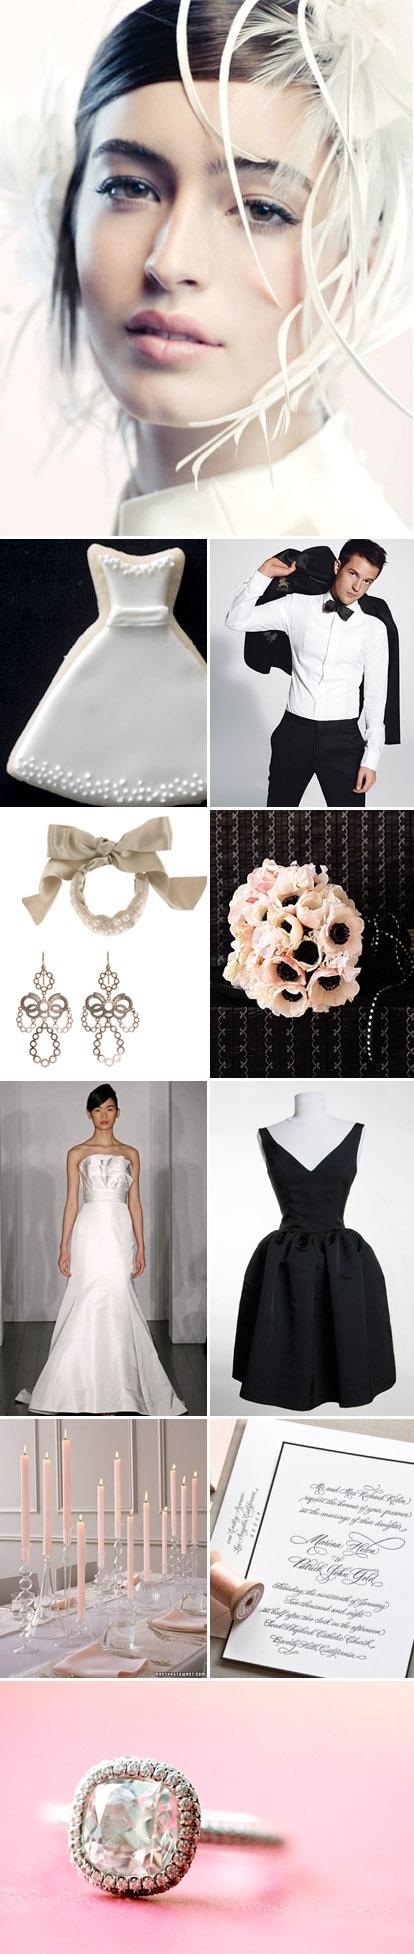 Wedding - Black And White Wedding Details & Decor